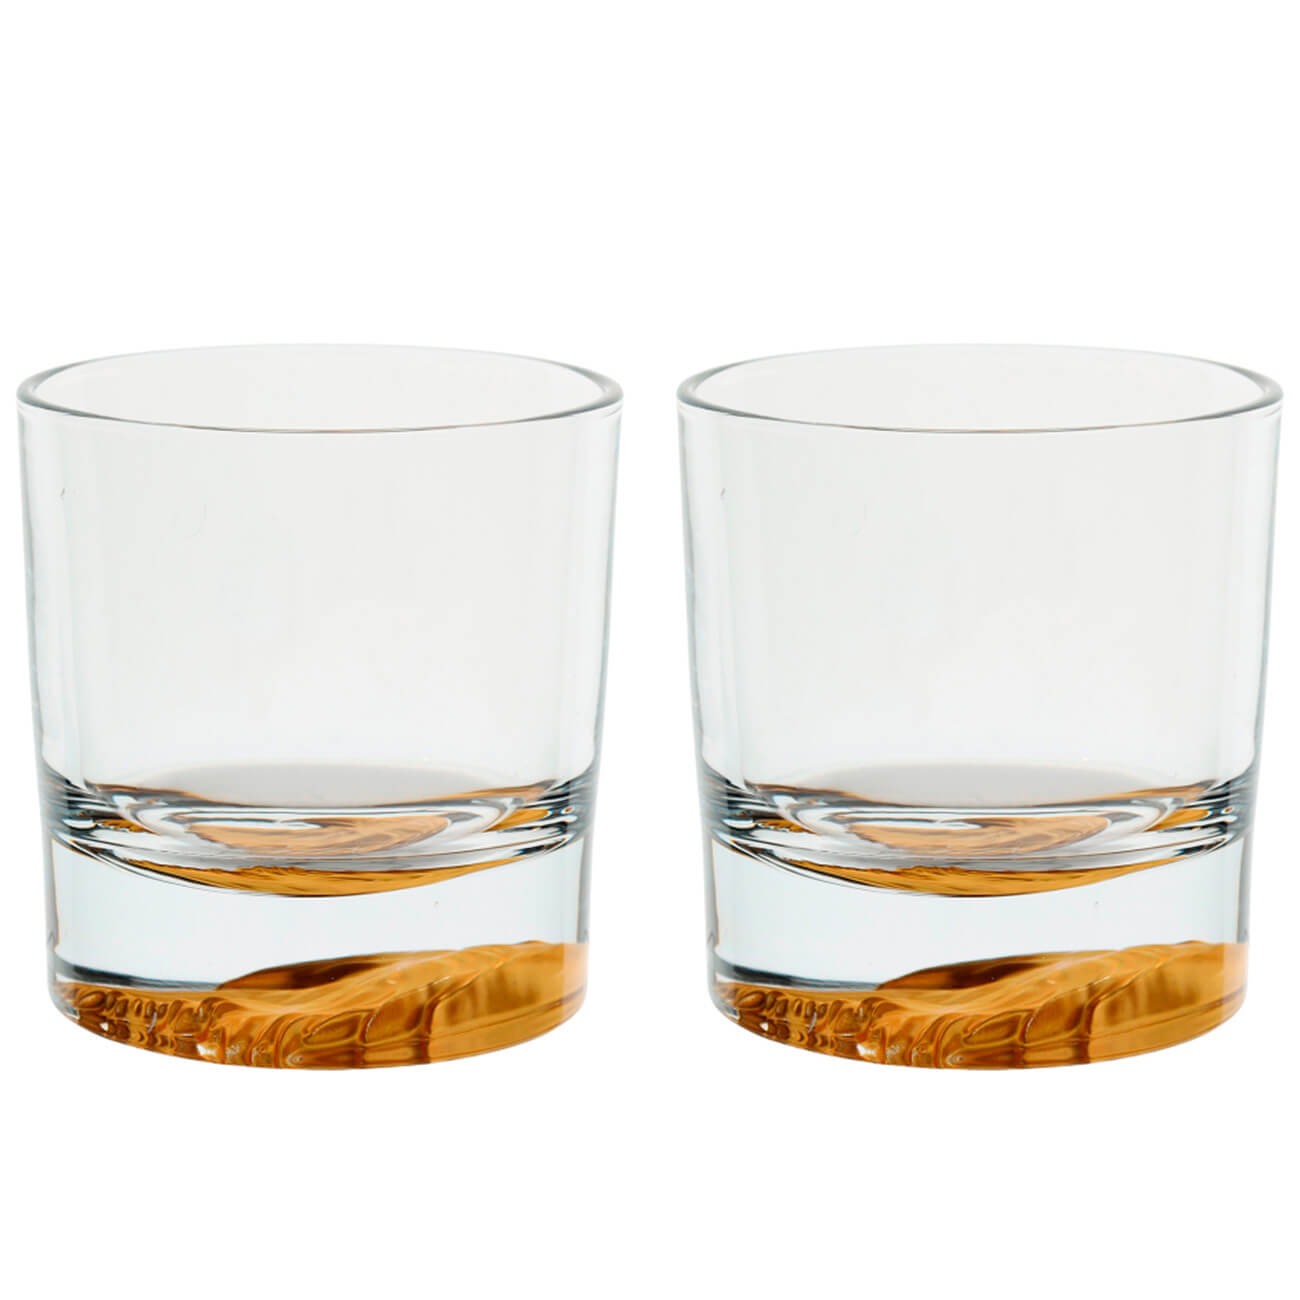 Стакан для виски, 300 мл, 2 шт, стекло, Орел, Elements набор для виски 2 перс 6 пр стаканы кубики стекло стеатит кракелюр ice